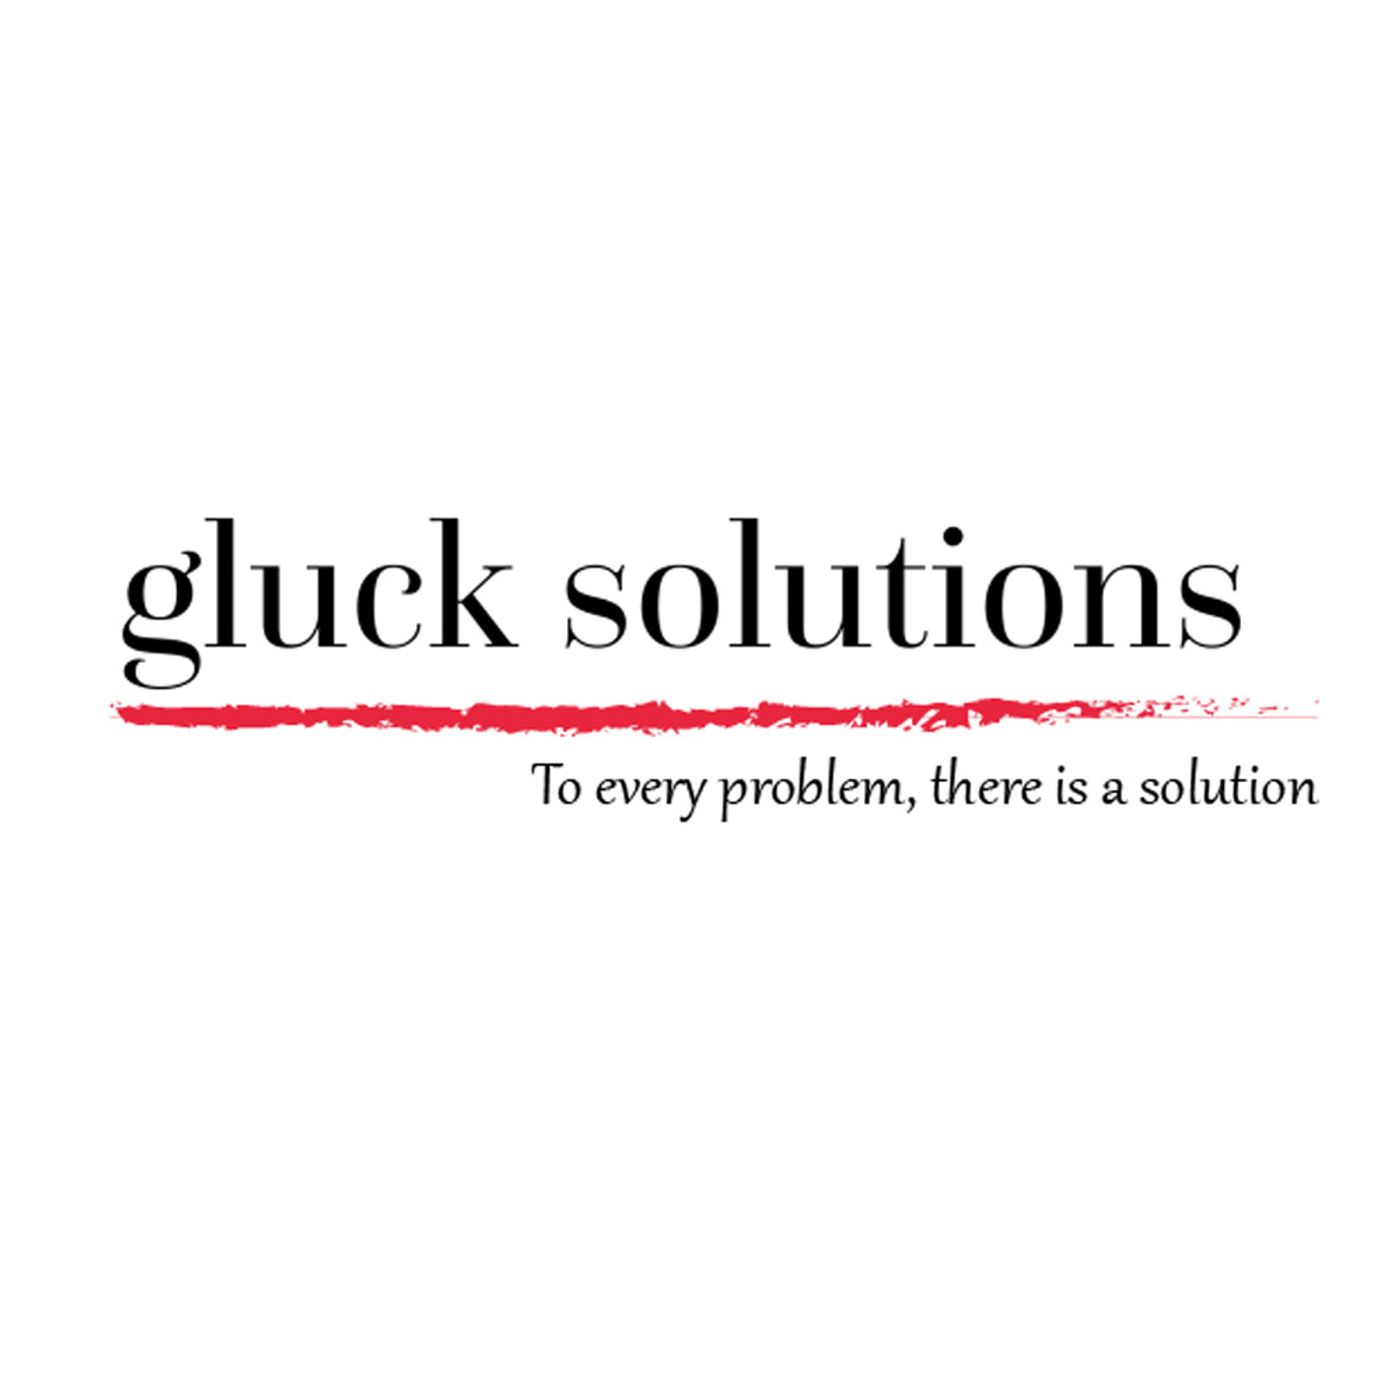 GLUCK SOLUTIONS 2-17-19